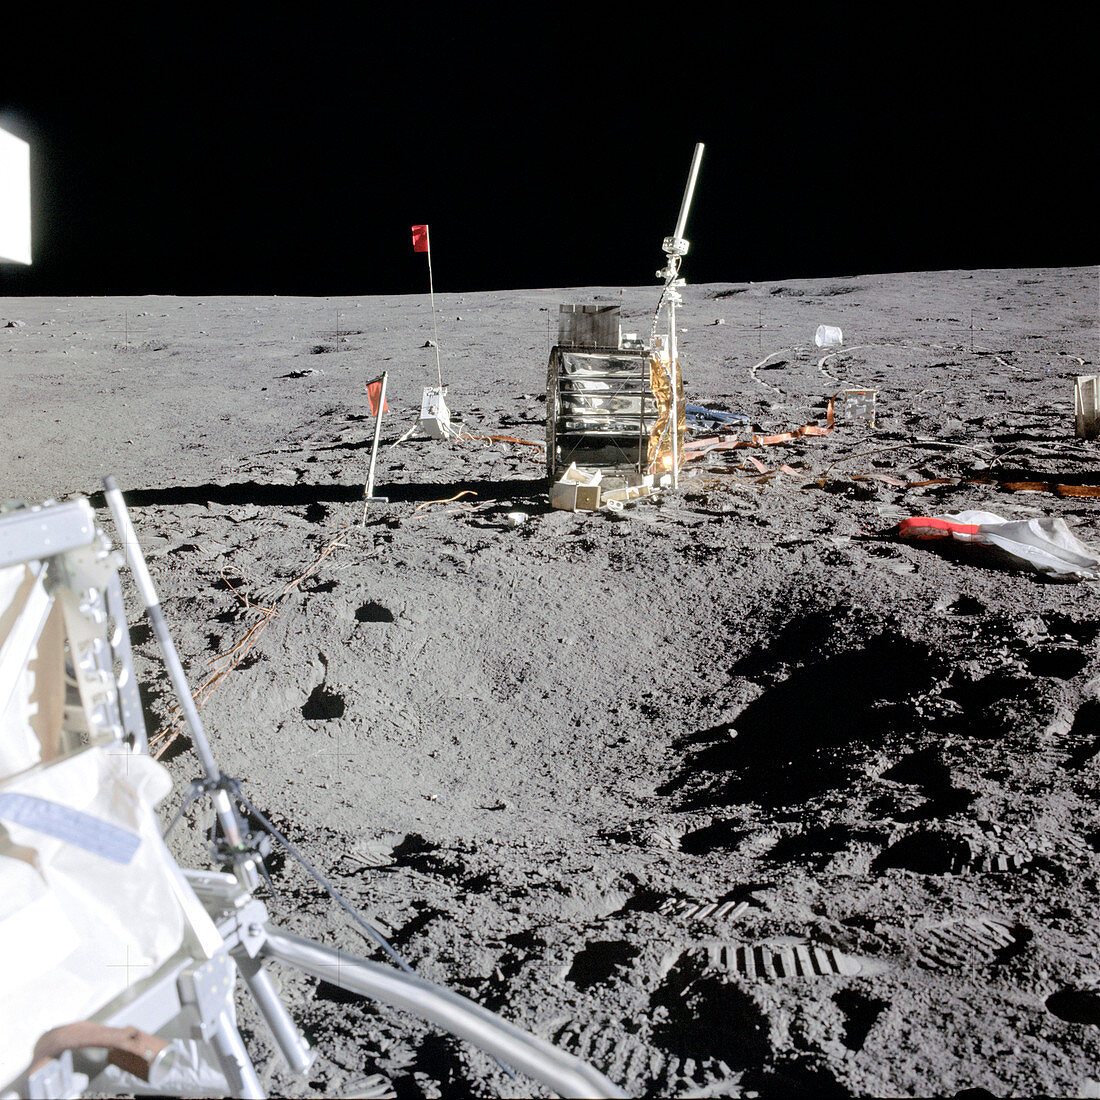 Apollo 14 experiments on the Moon